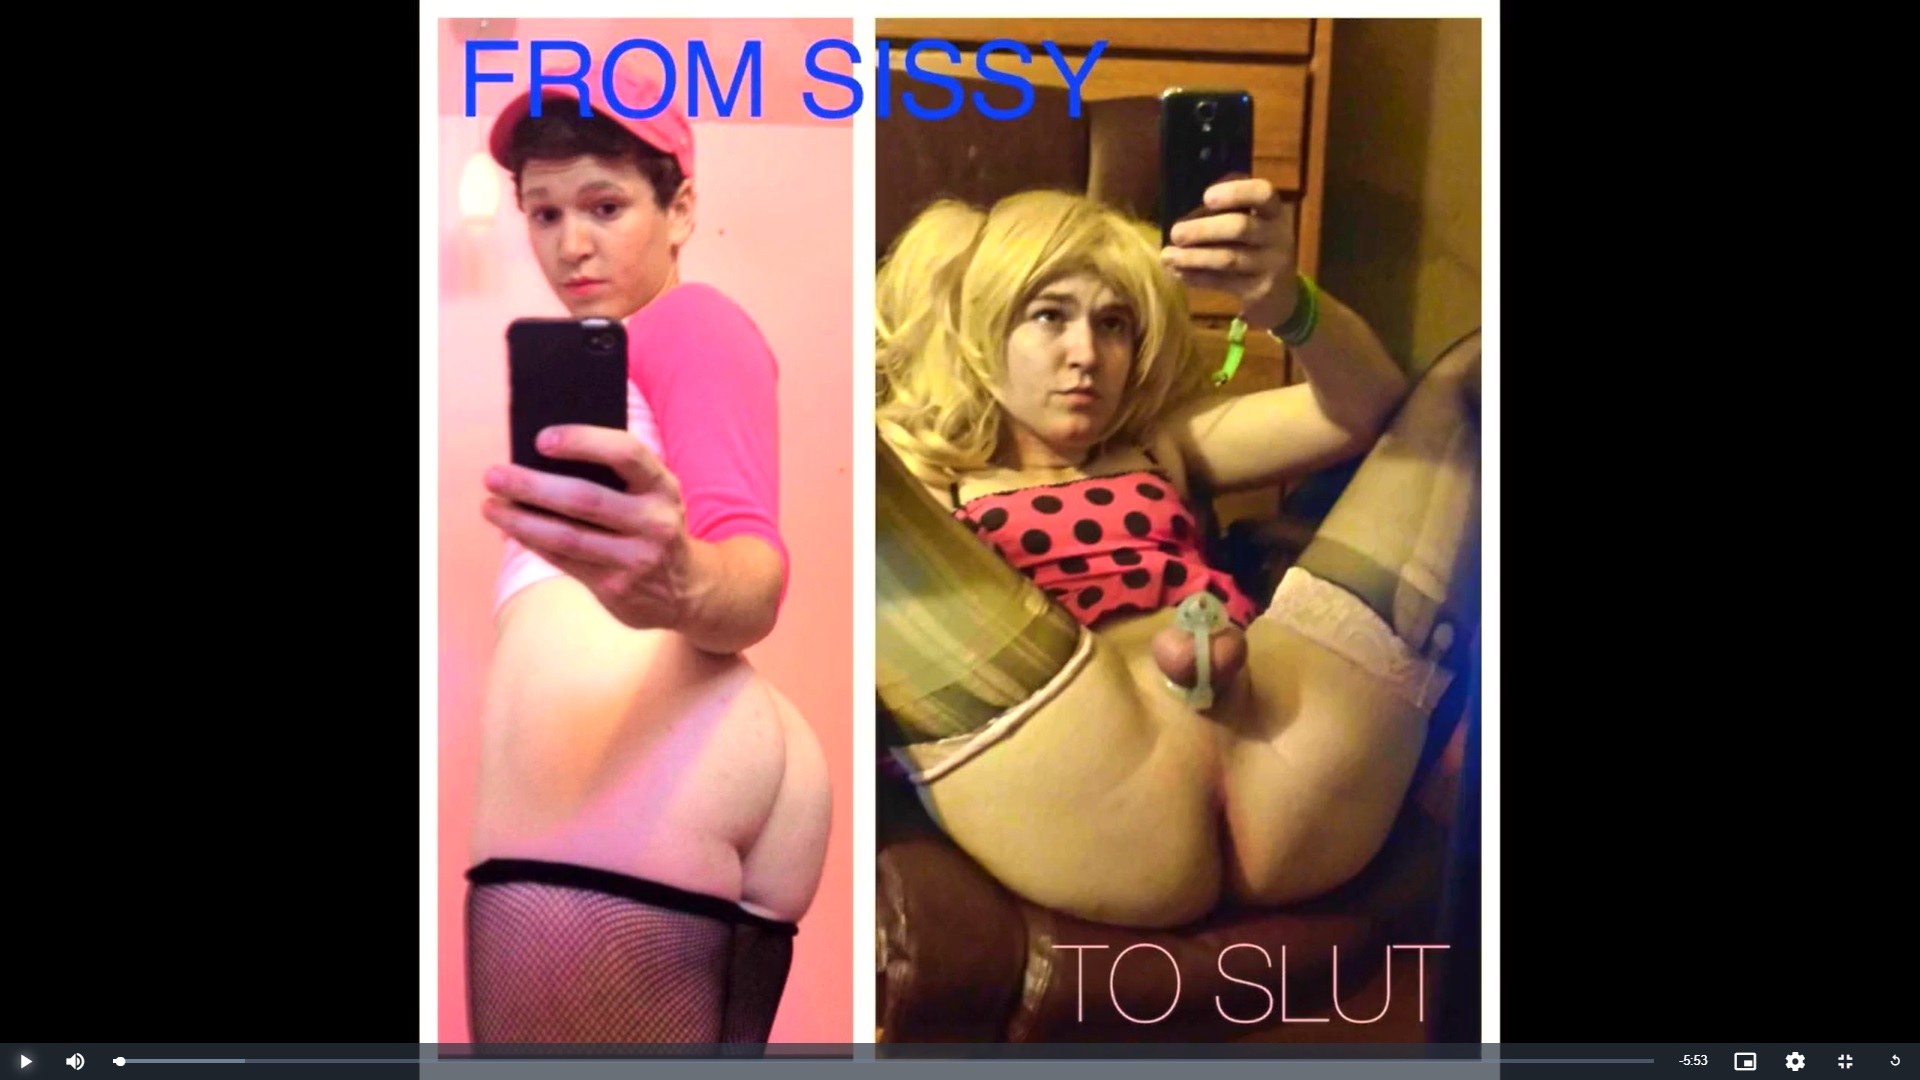 From Sissy To Slut 